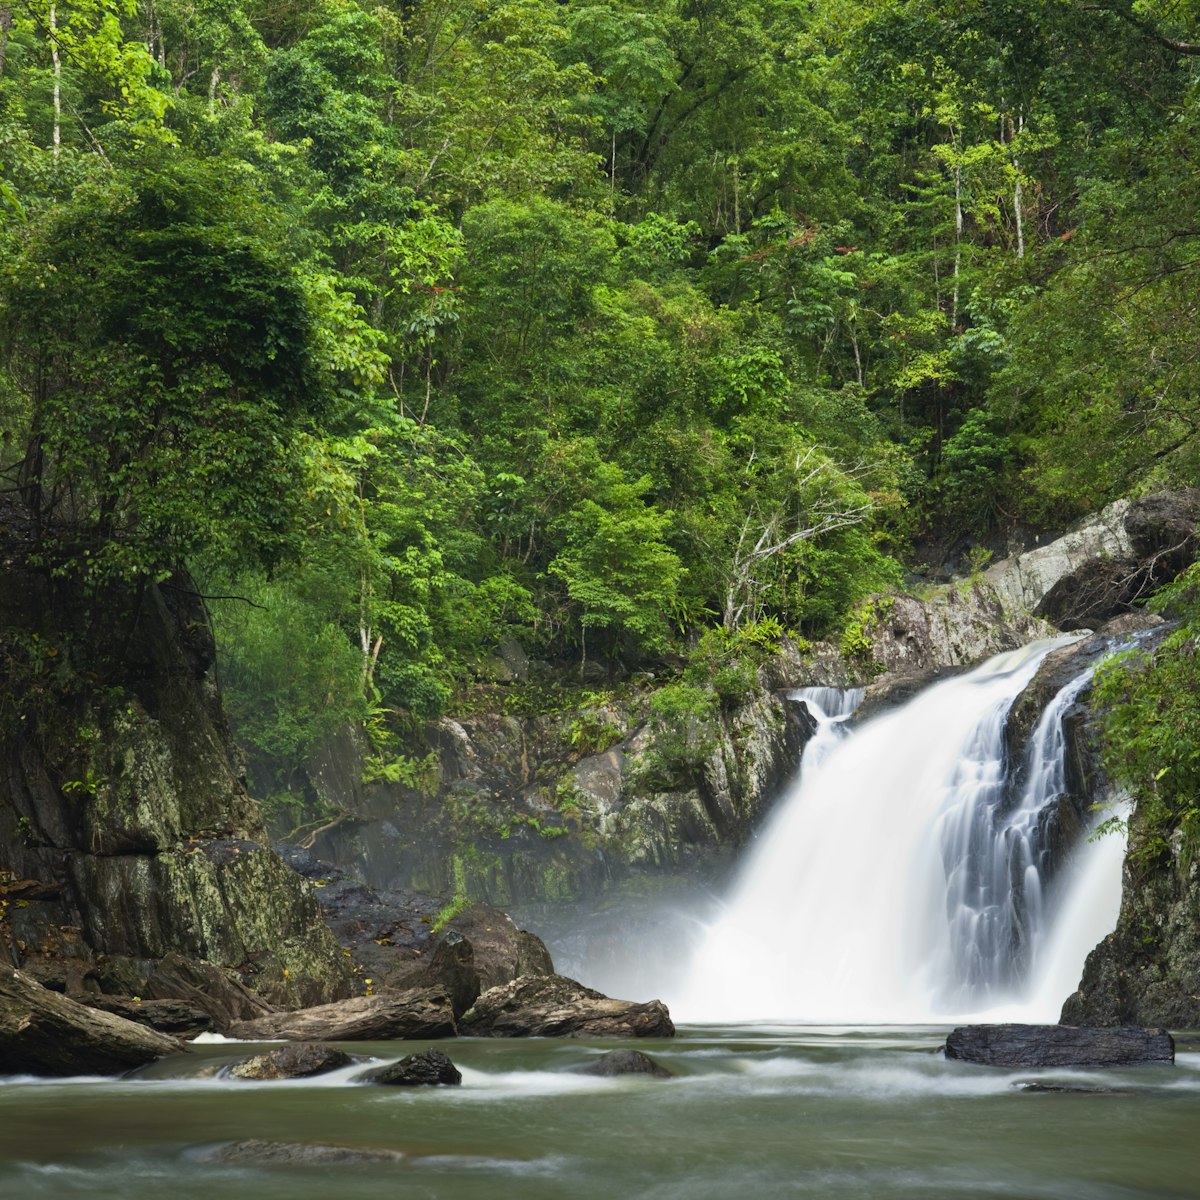 Rainforest waterfall